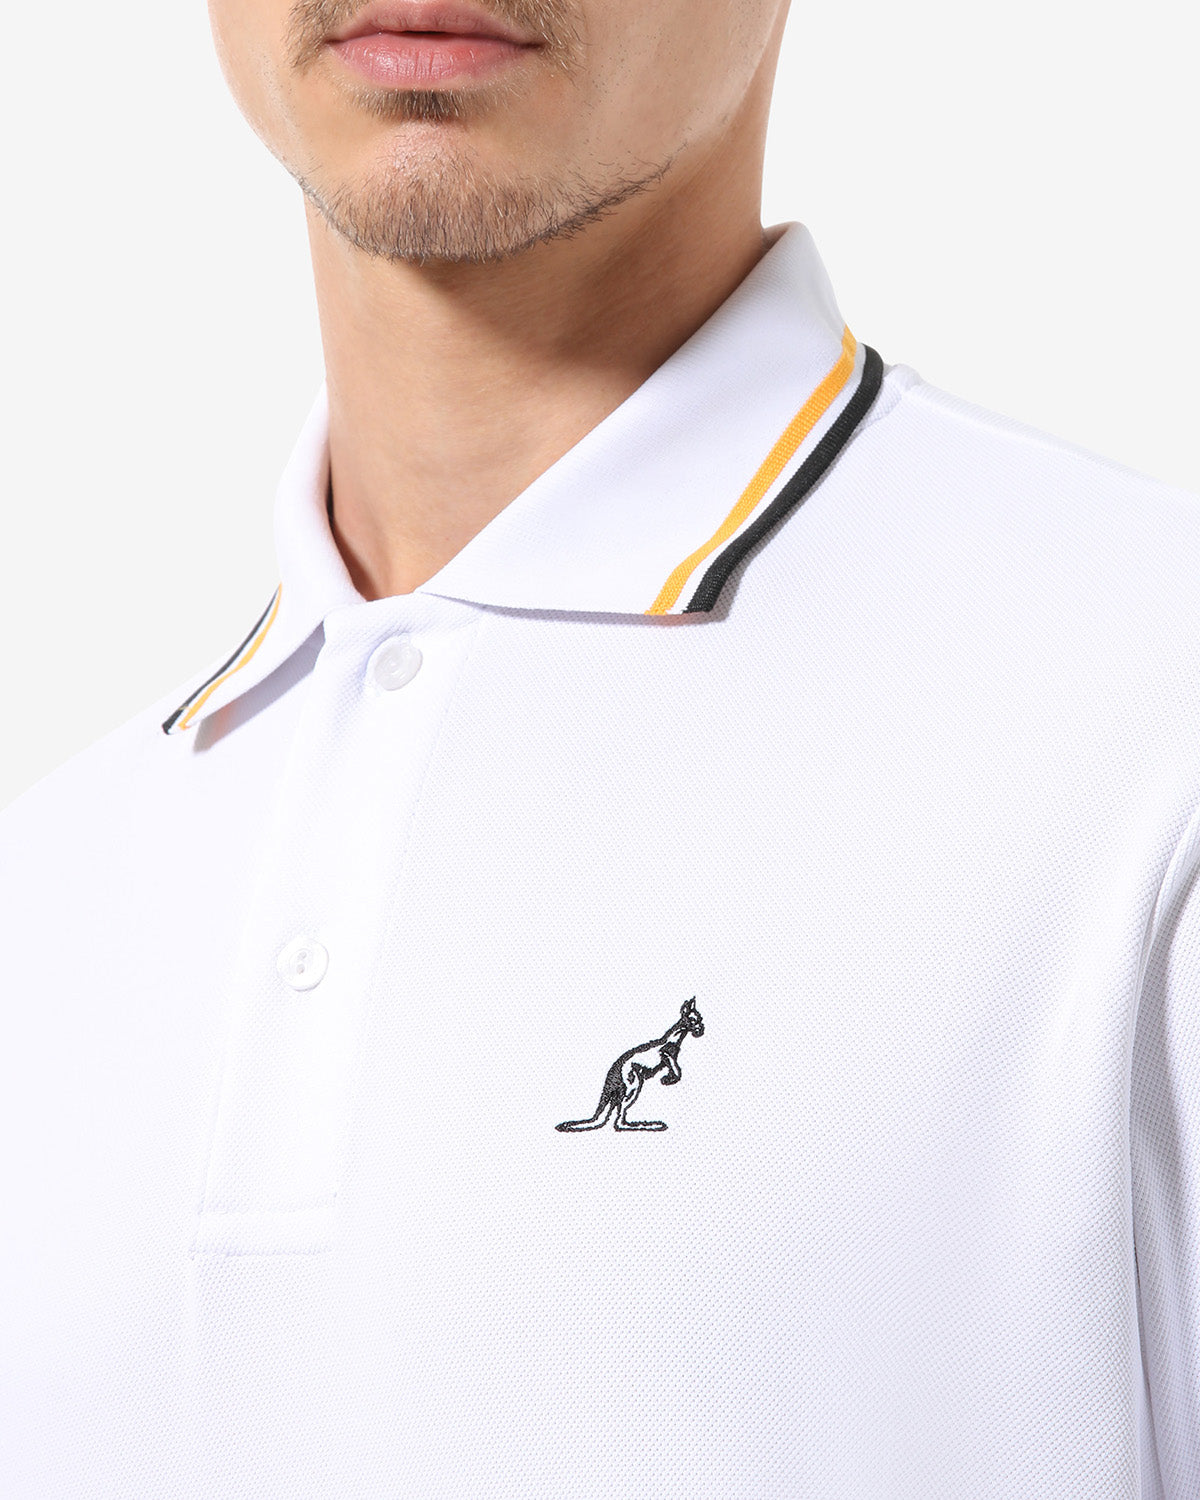 Tech Piquet Polo Shirt: Australian Sportswear